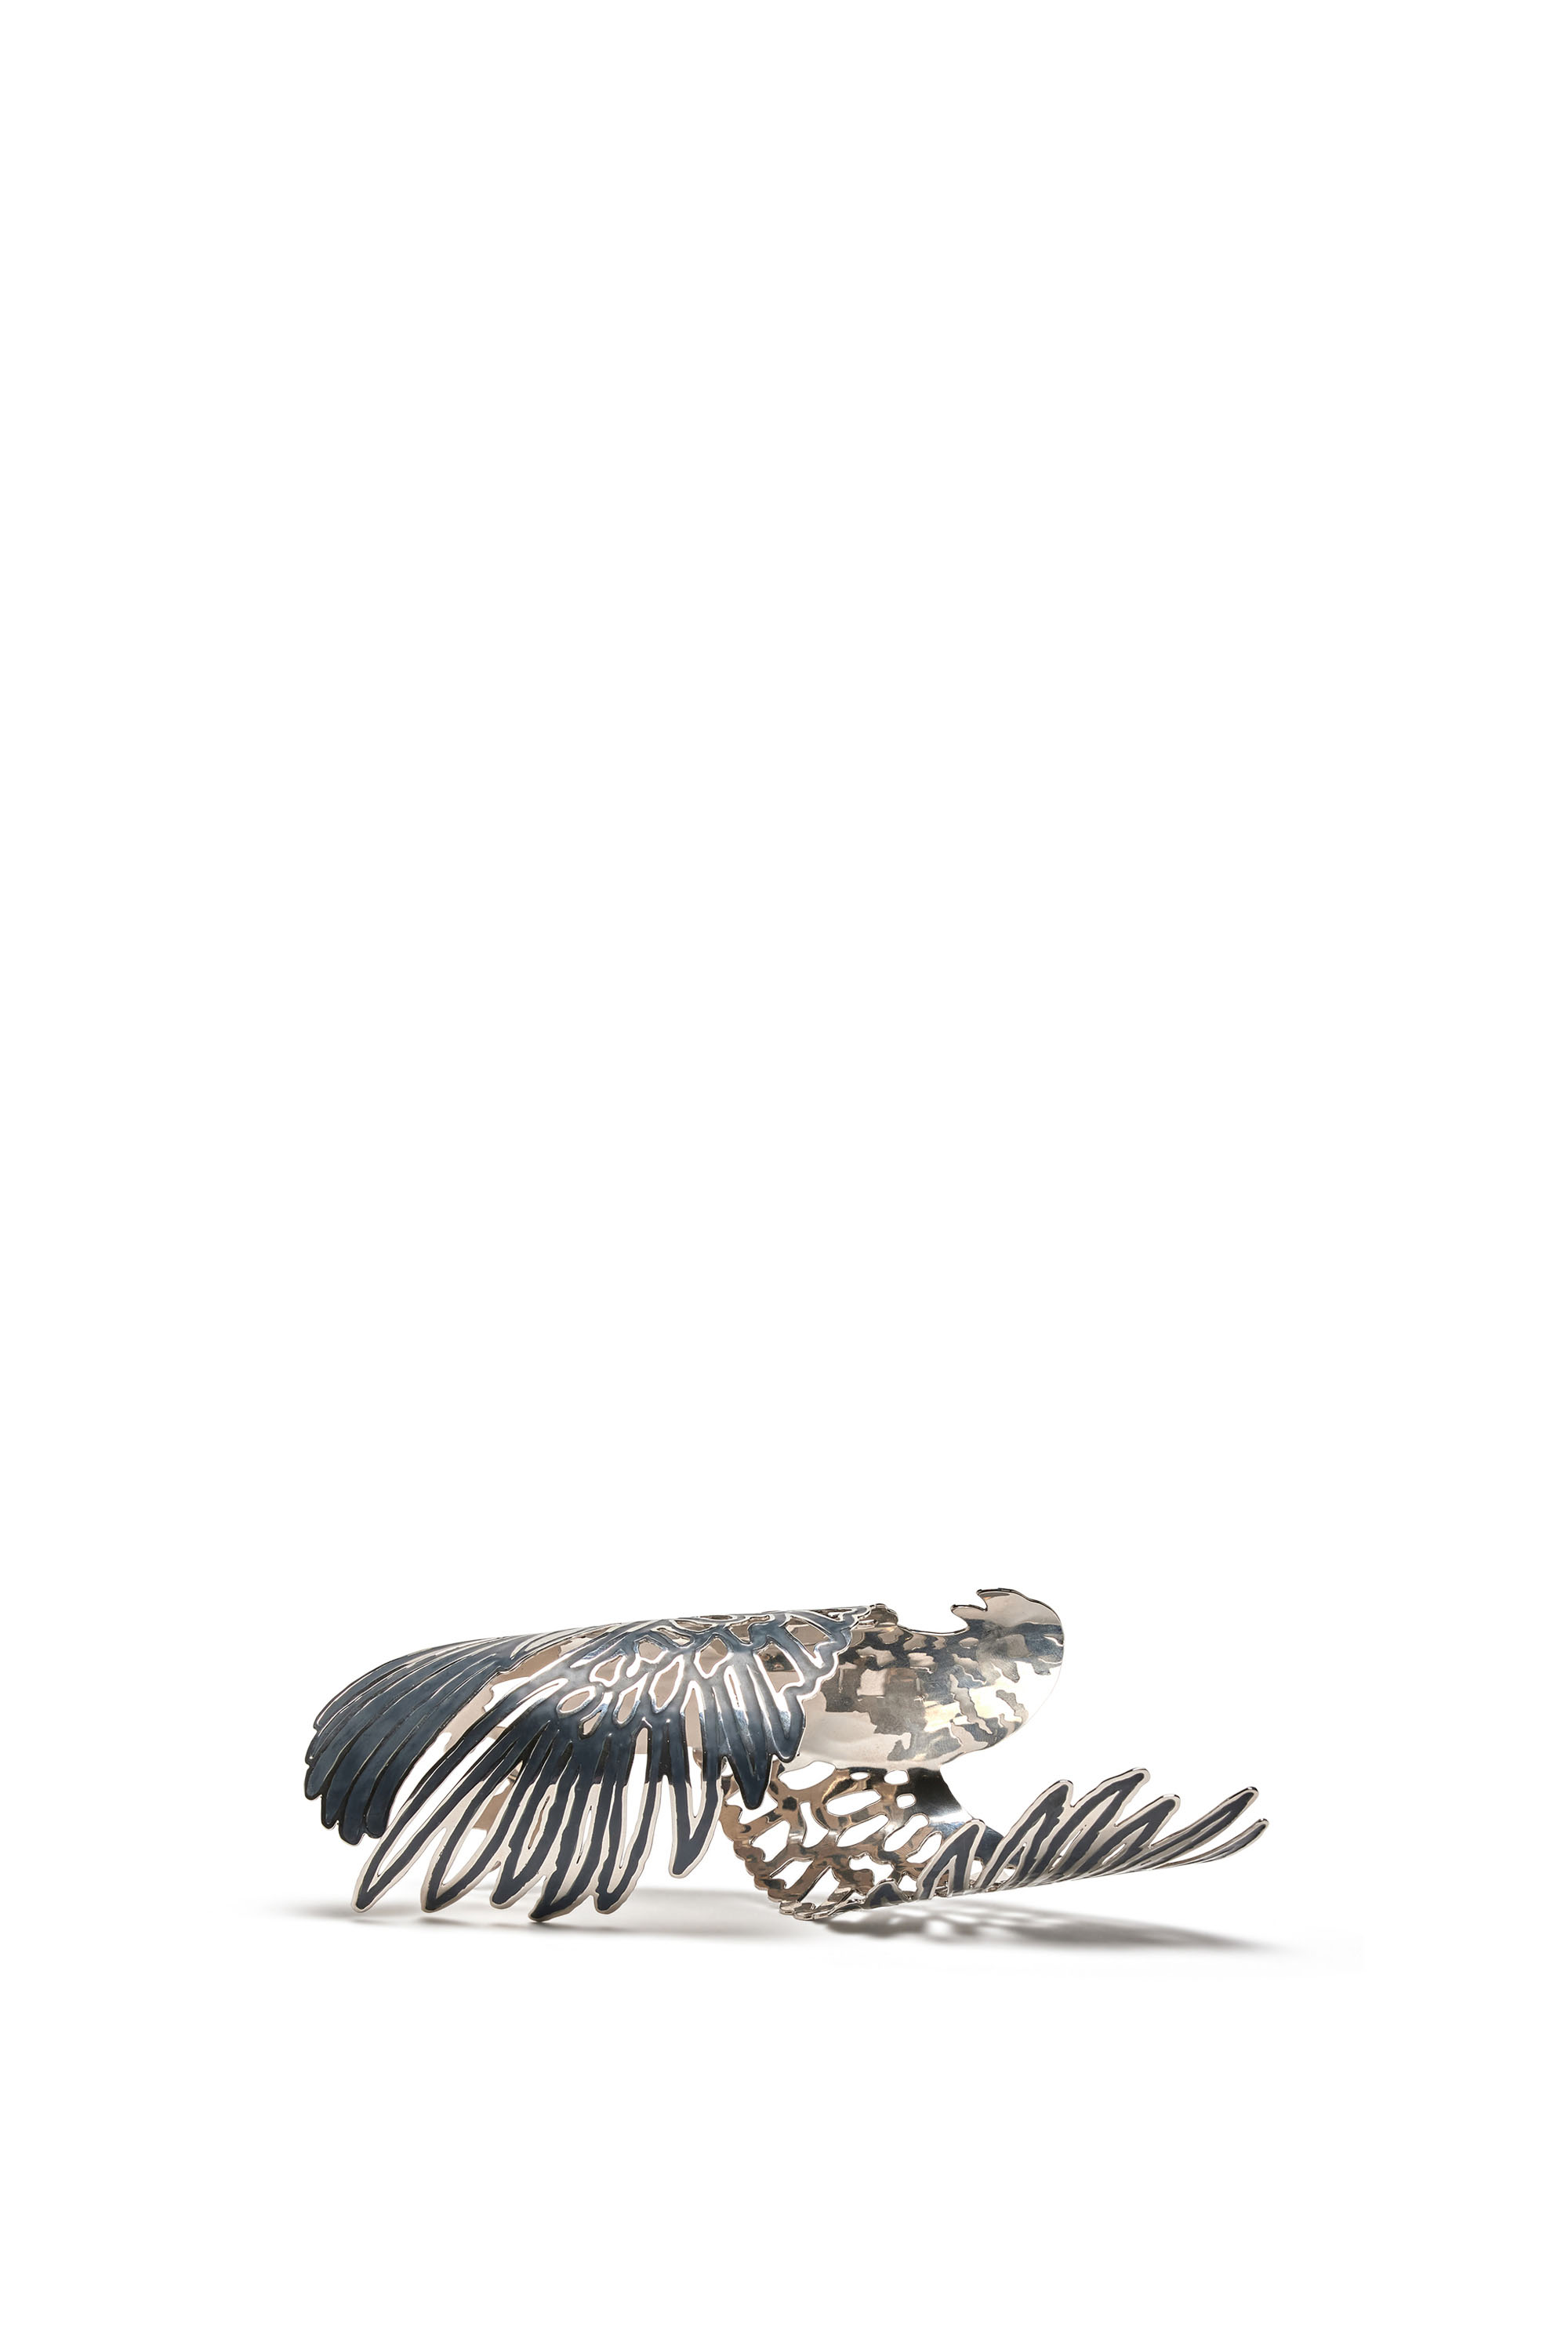 Diesel - EAGLE ARMBAND, Female Eagle arm cuff in Silver - Image 3